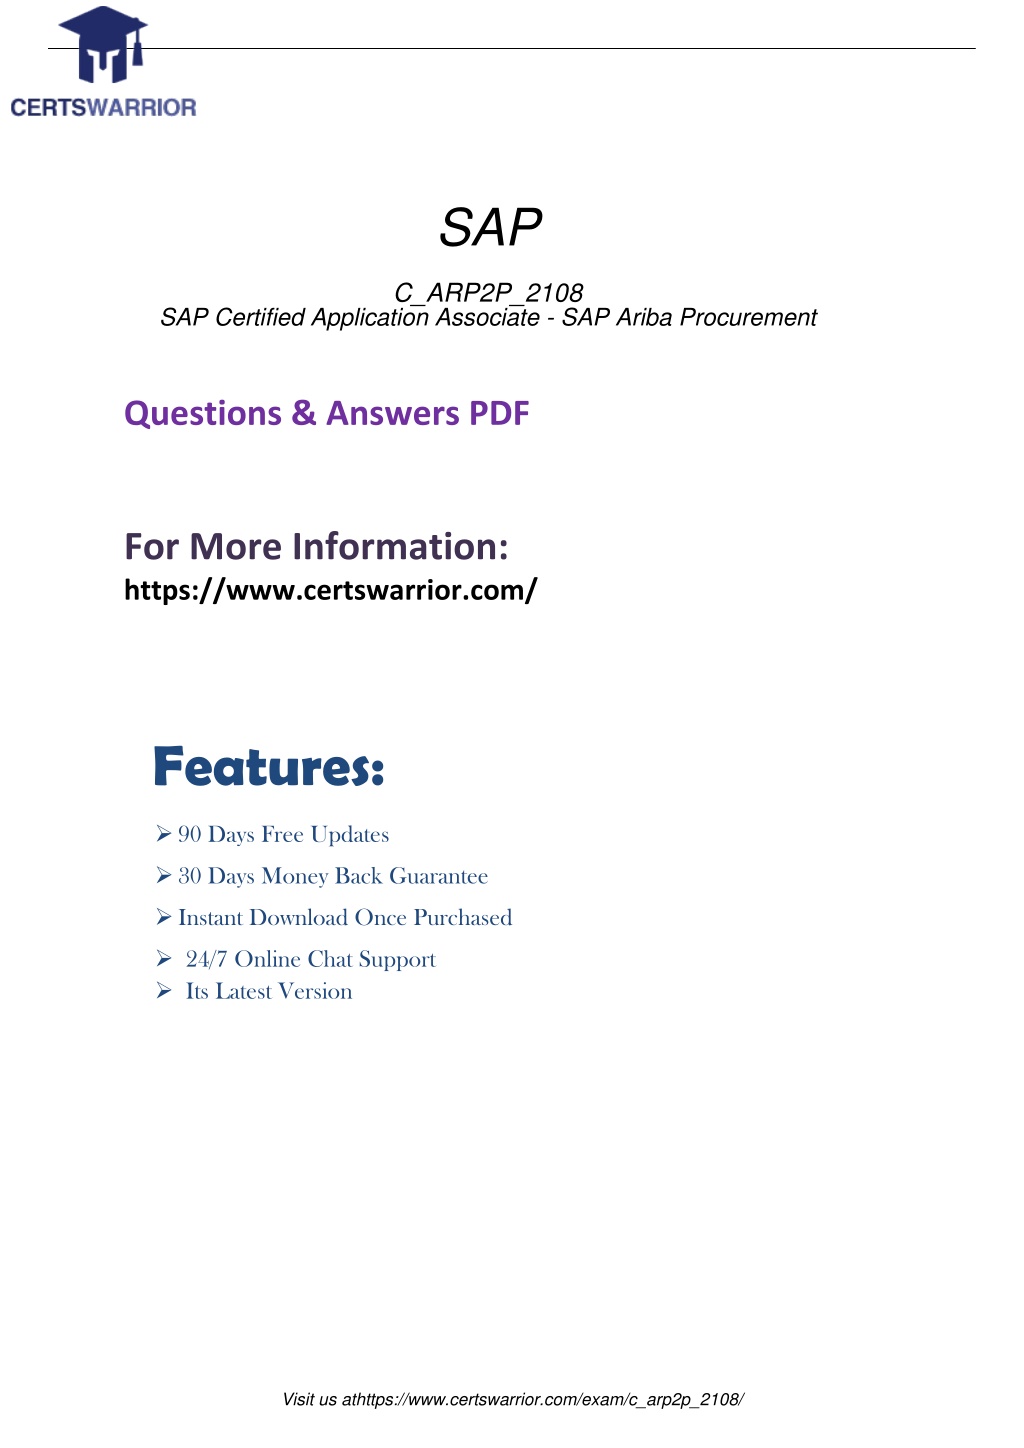 C-ARP2P-2108 Exam Pattern